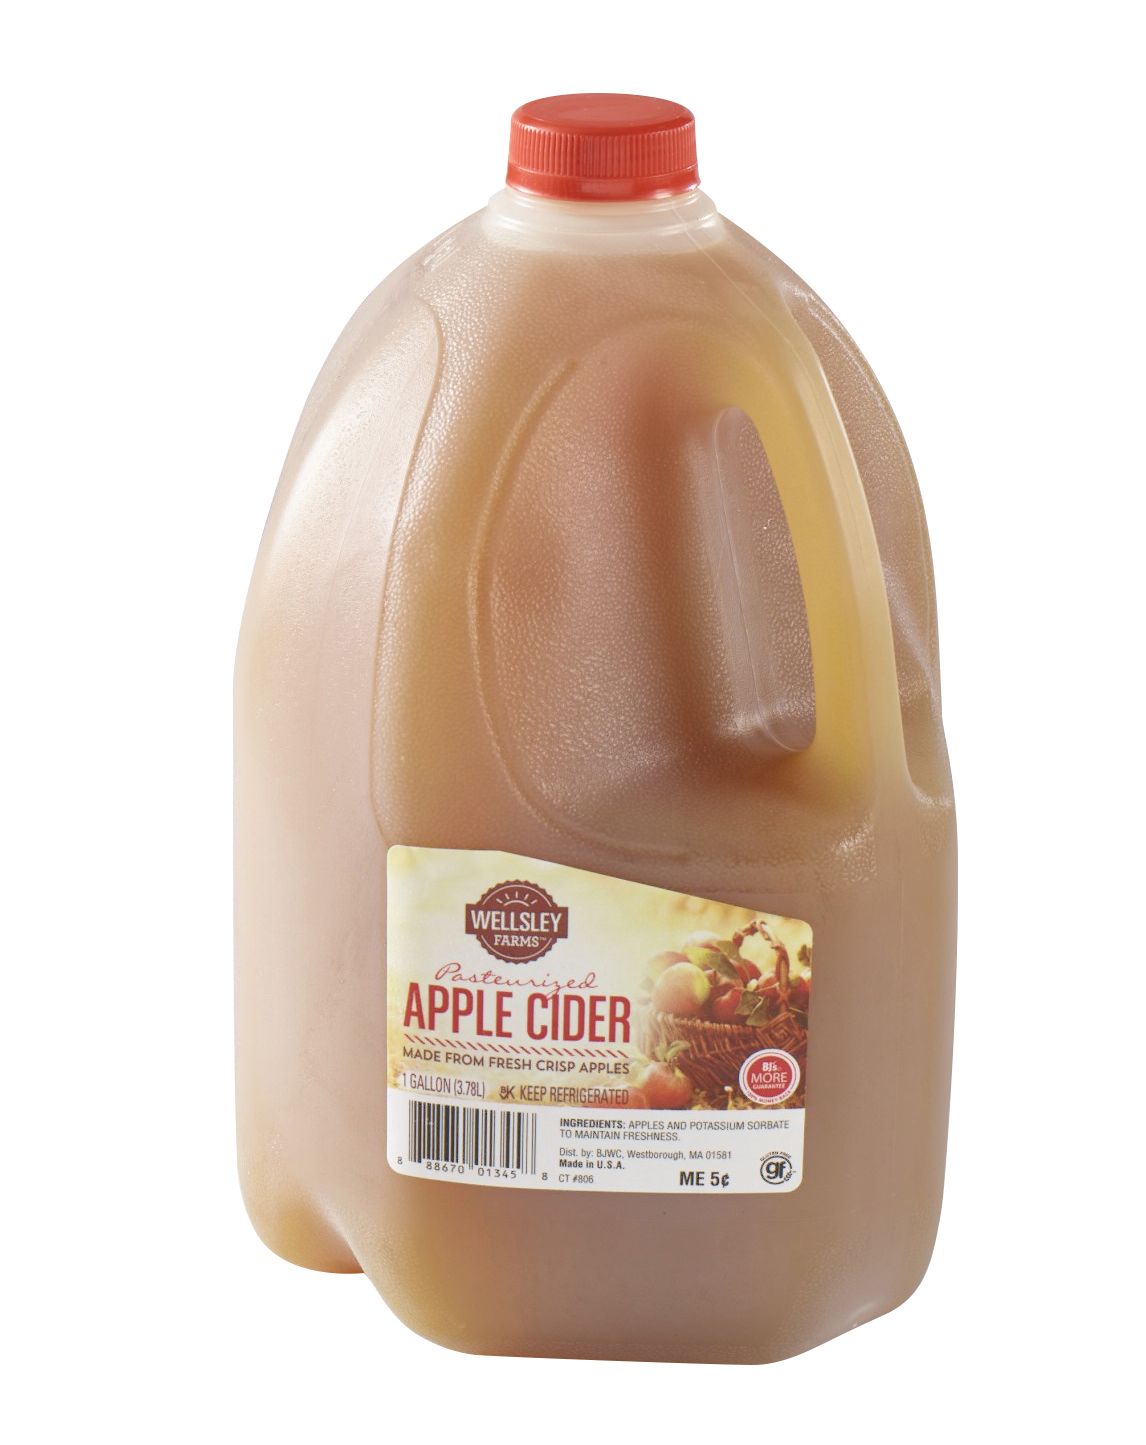 Apple Cider Ingredients | tunersread.com